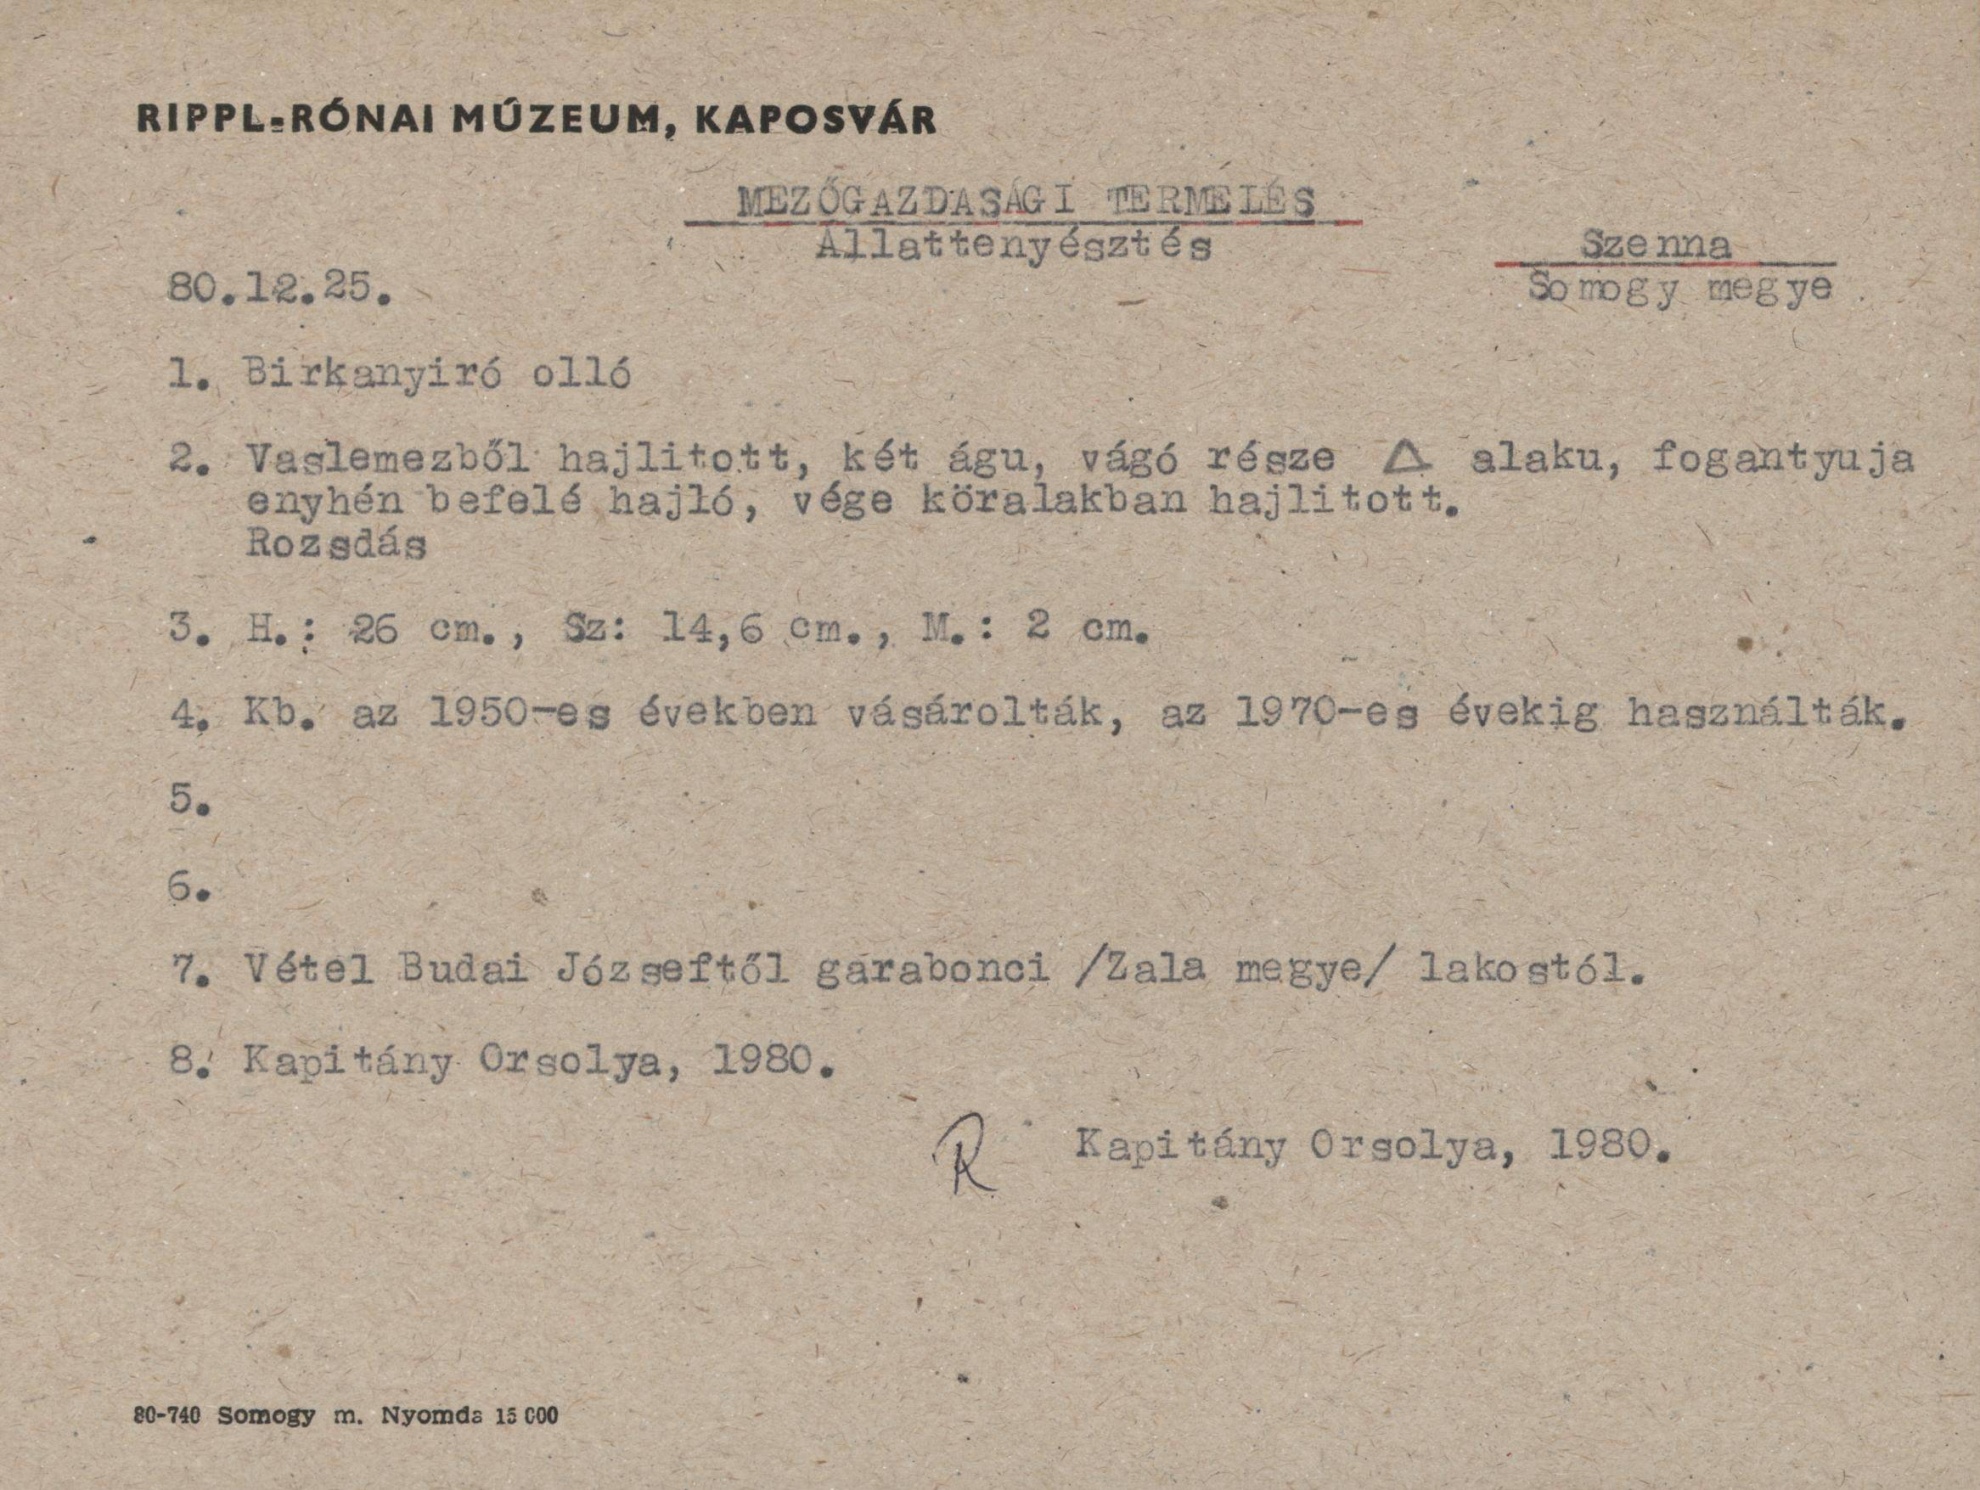 Birkanyíró olló (Rippl-Rónai Múzeum CC BY-NC-SA)